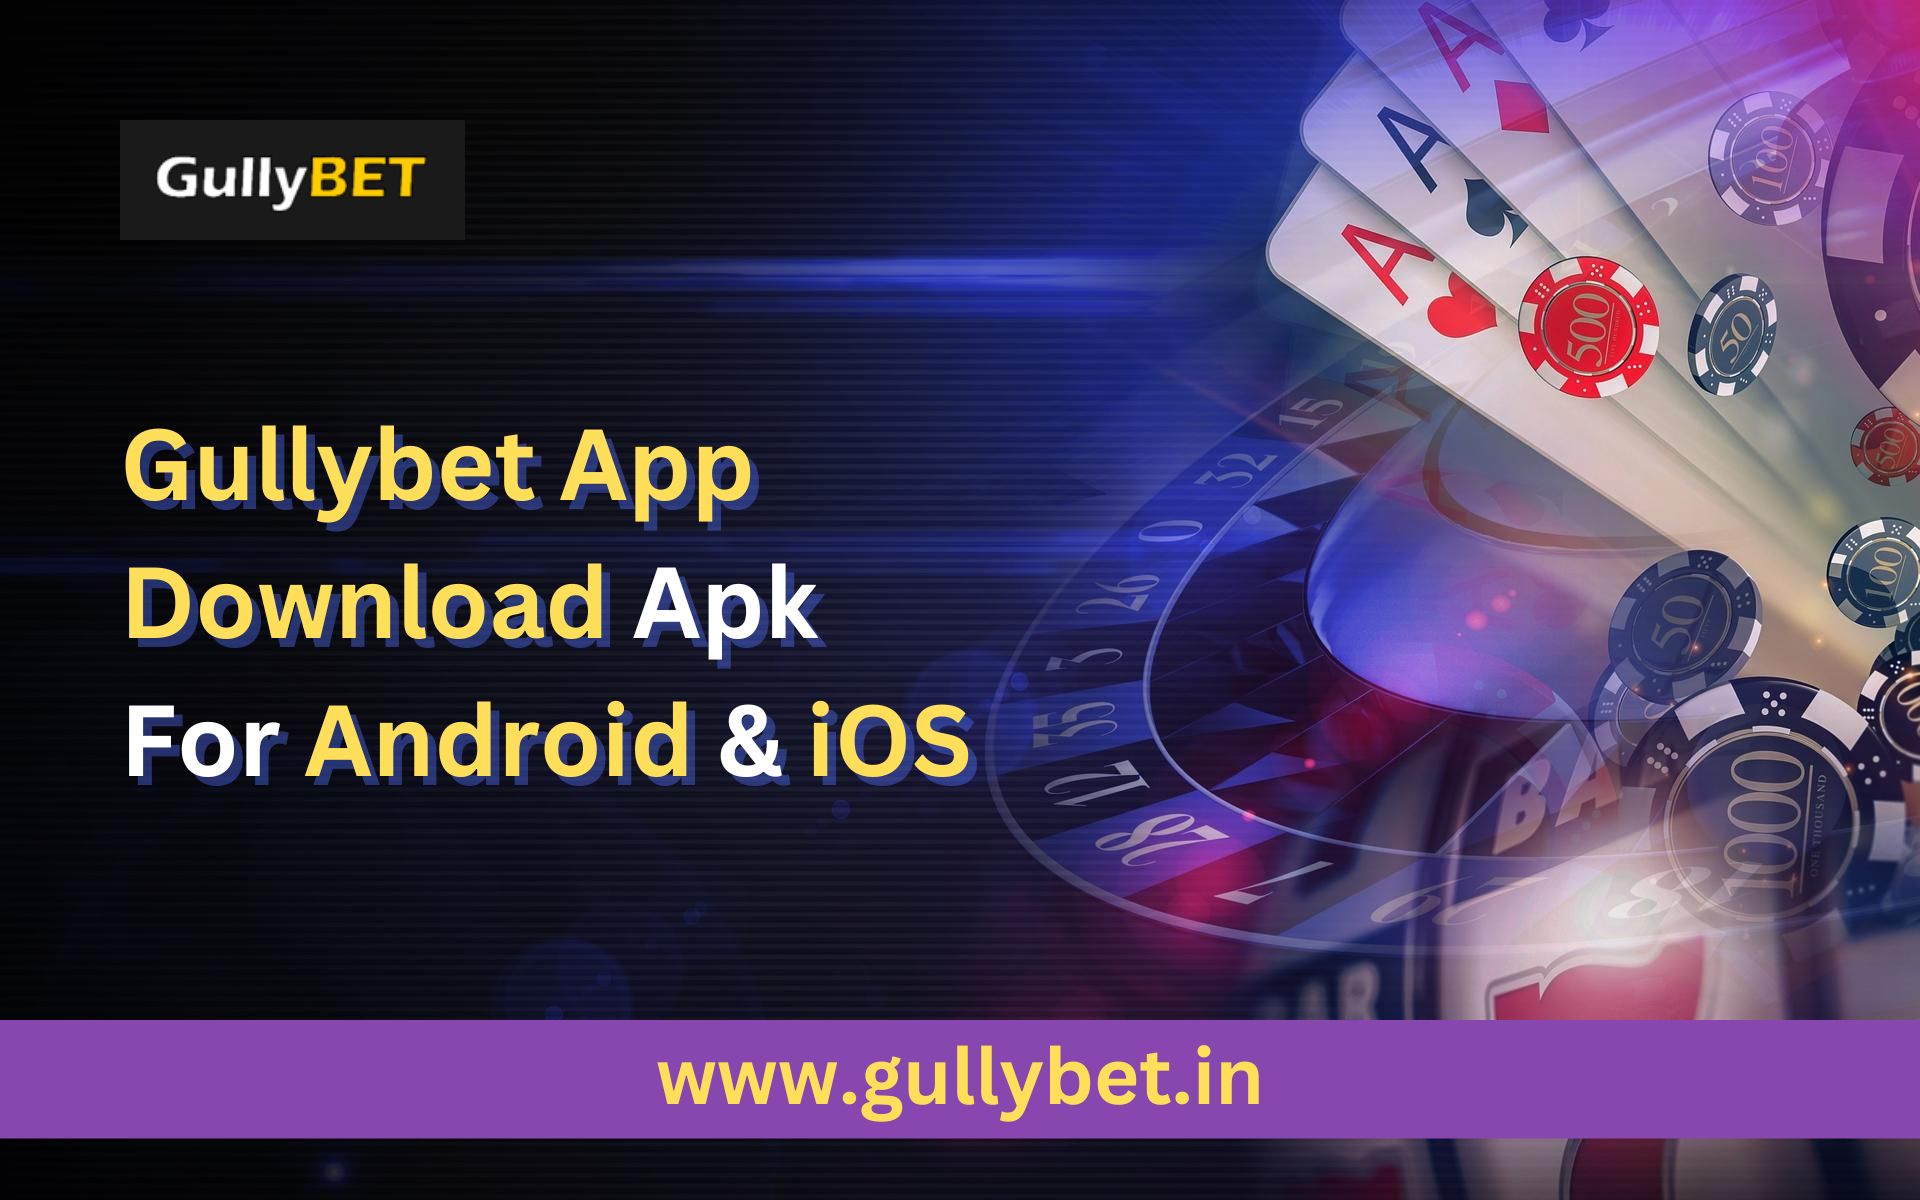 Gullybet app download apk latest version